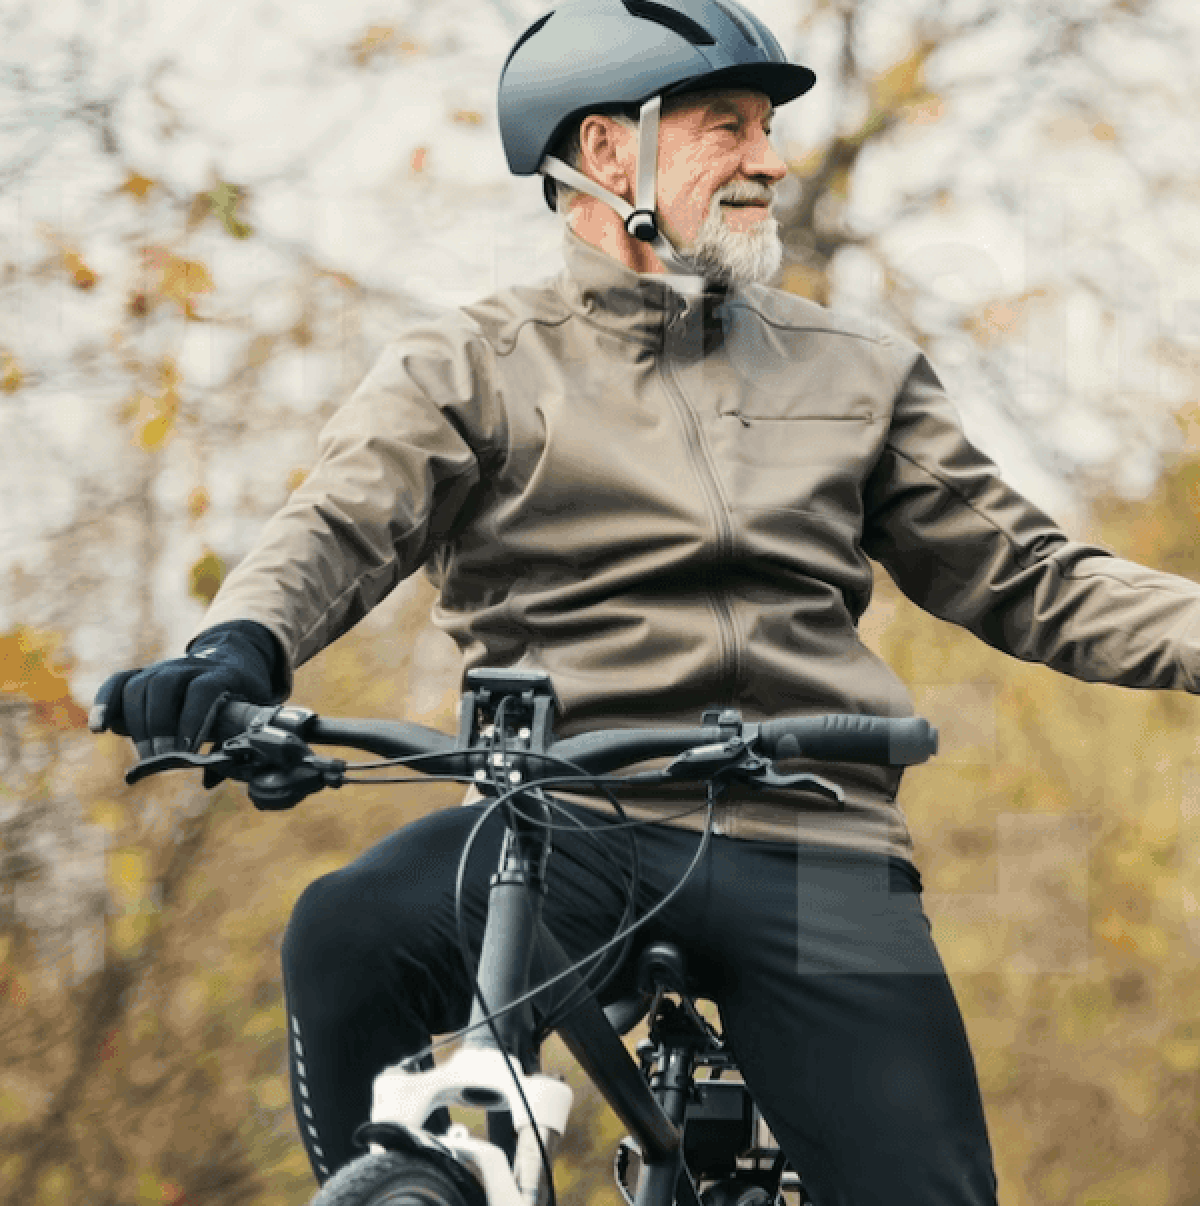 Old man on bike in woods